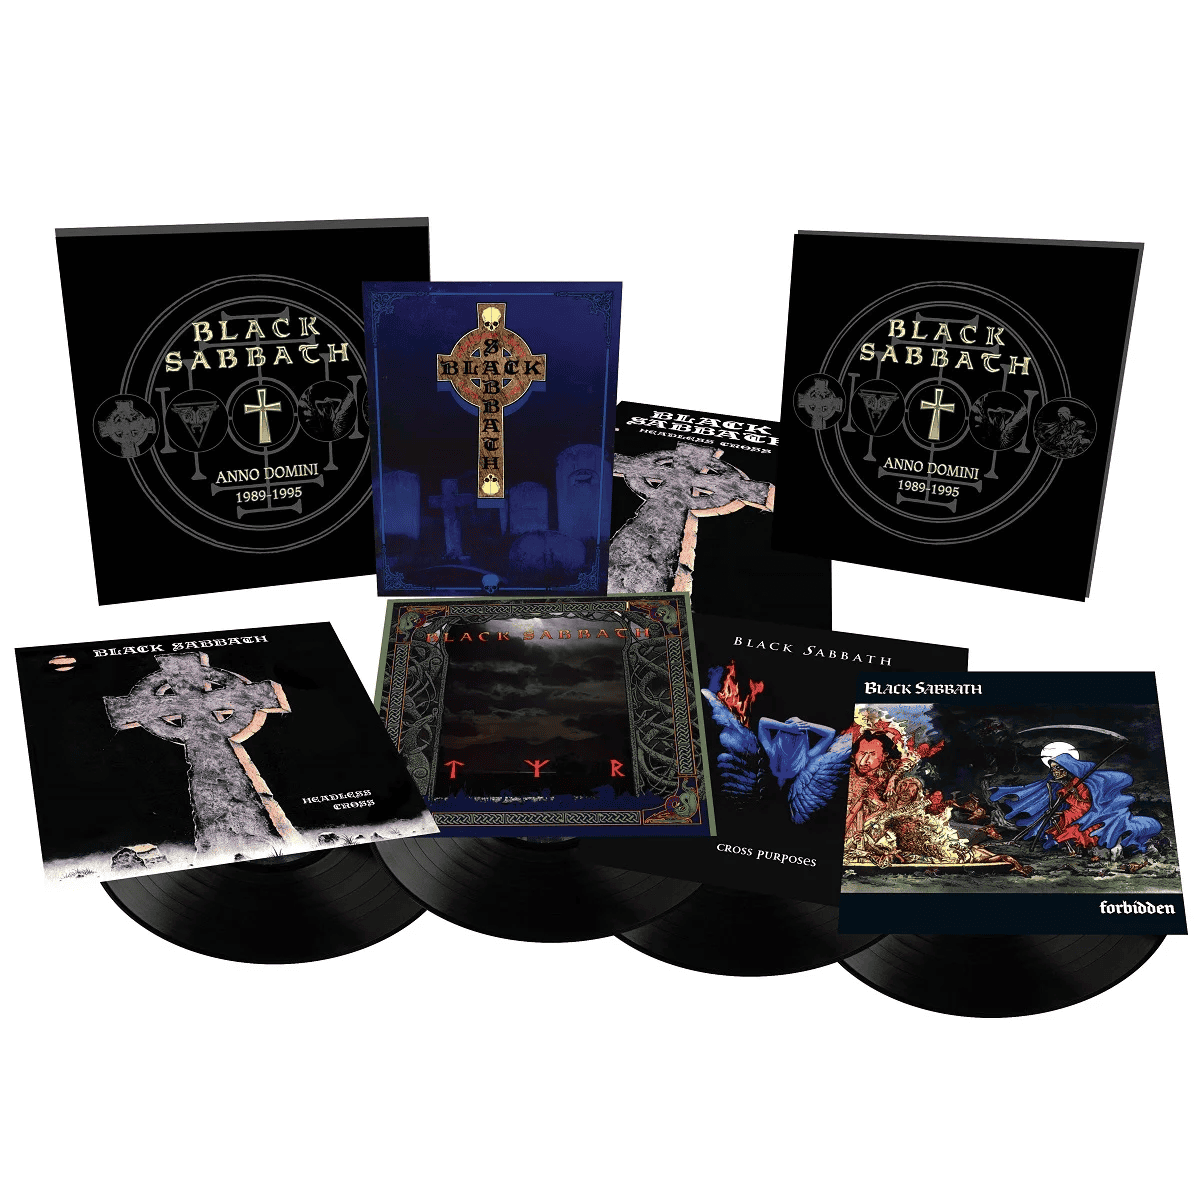 BLACK SABBATH - Anno Domini: 1989 - 1995 Vinyl Box Set